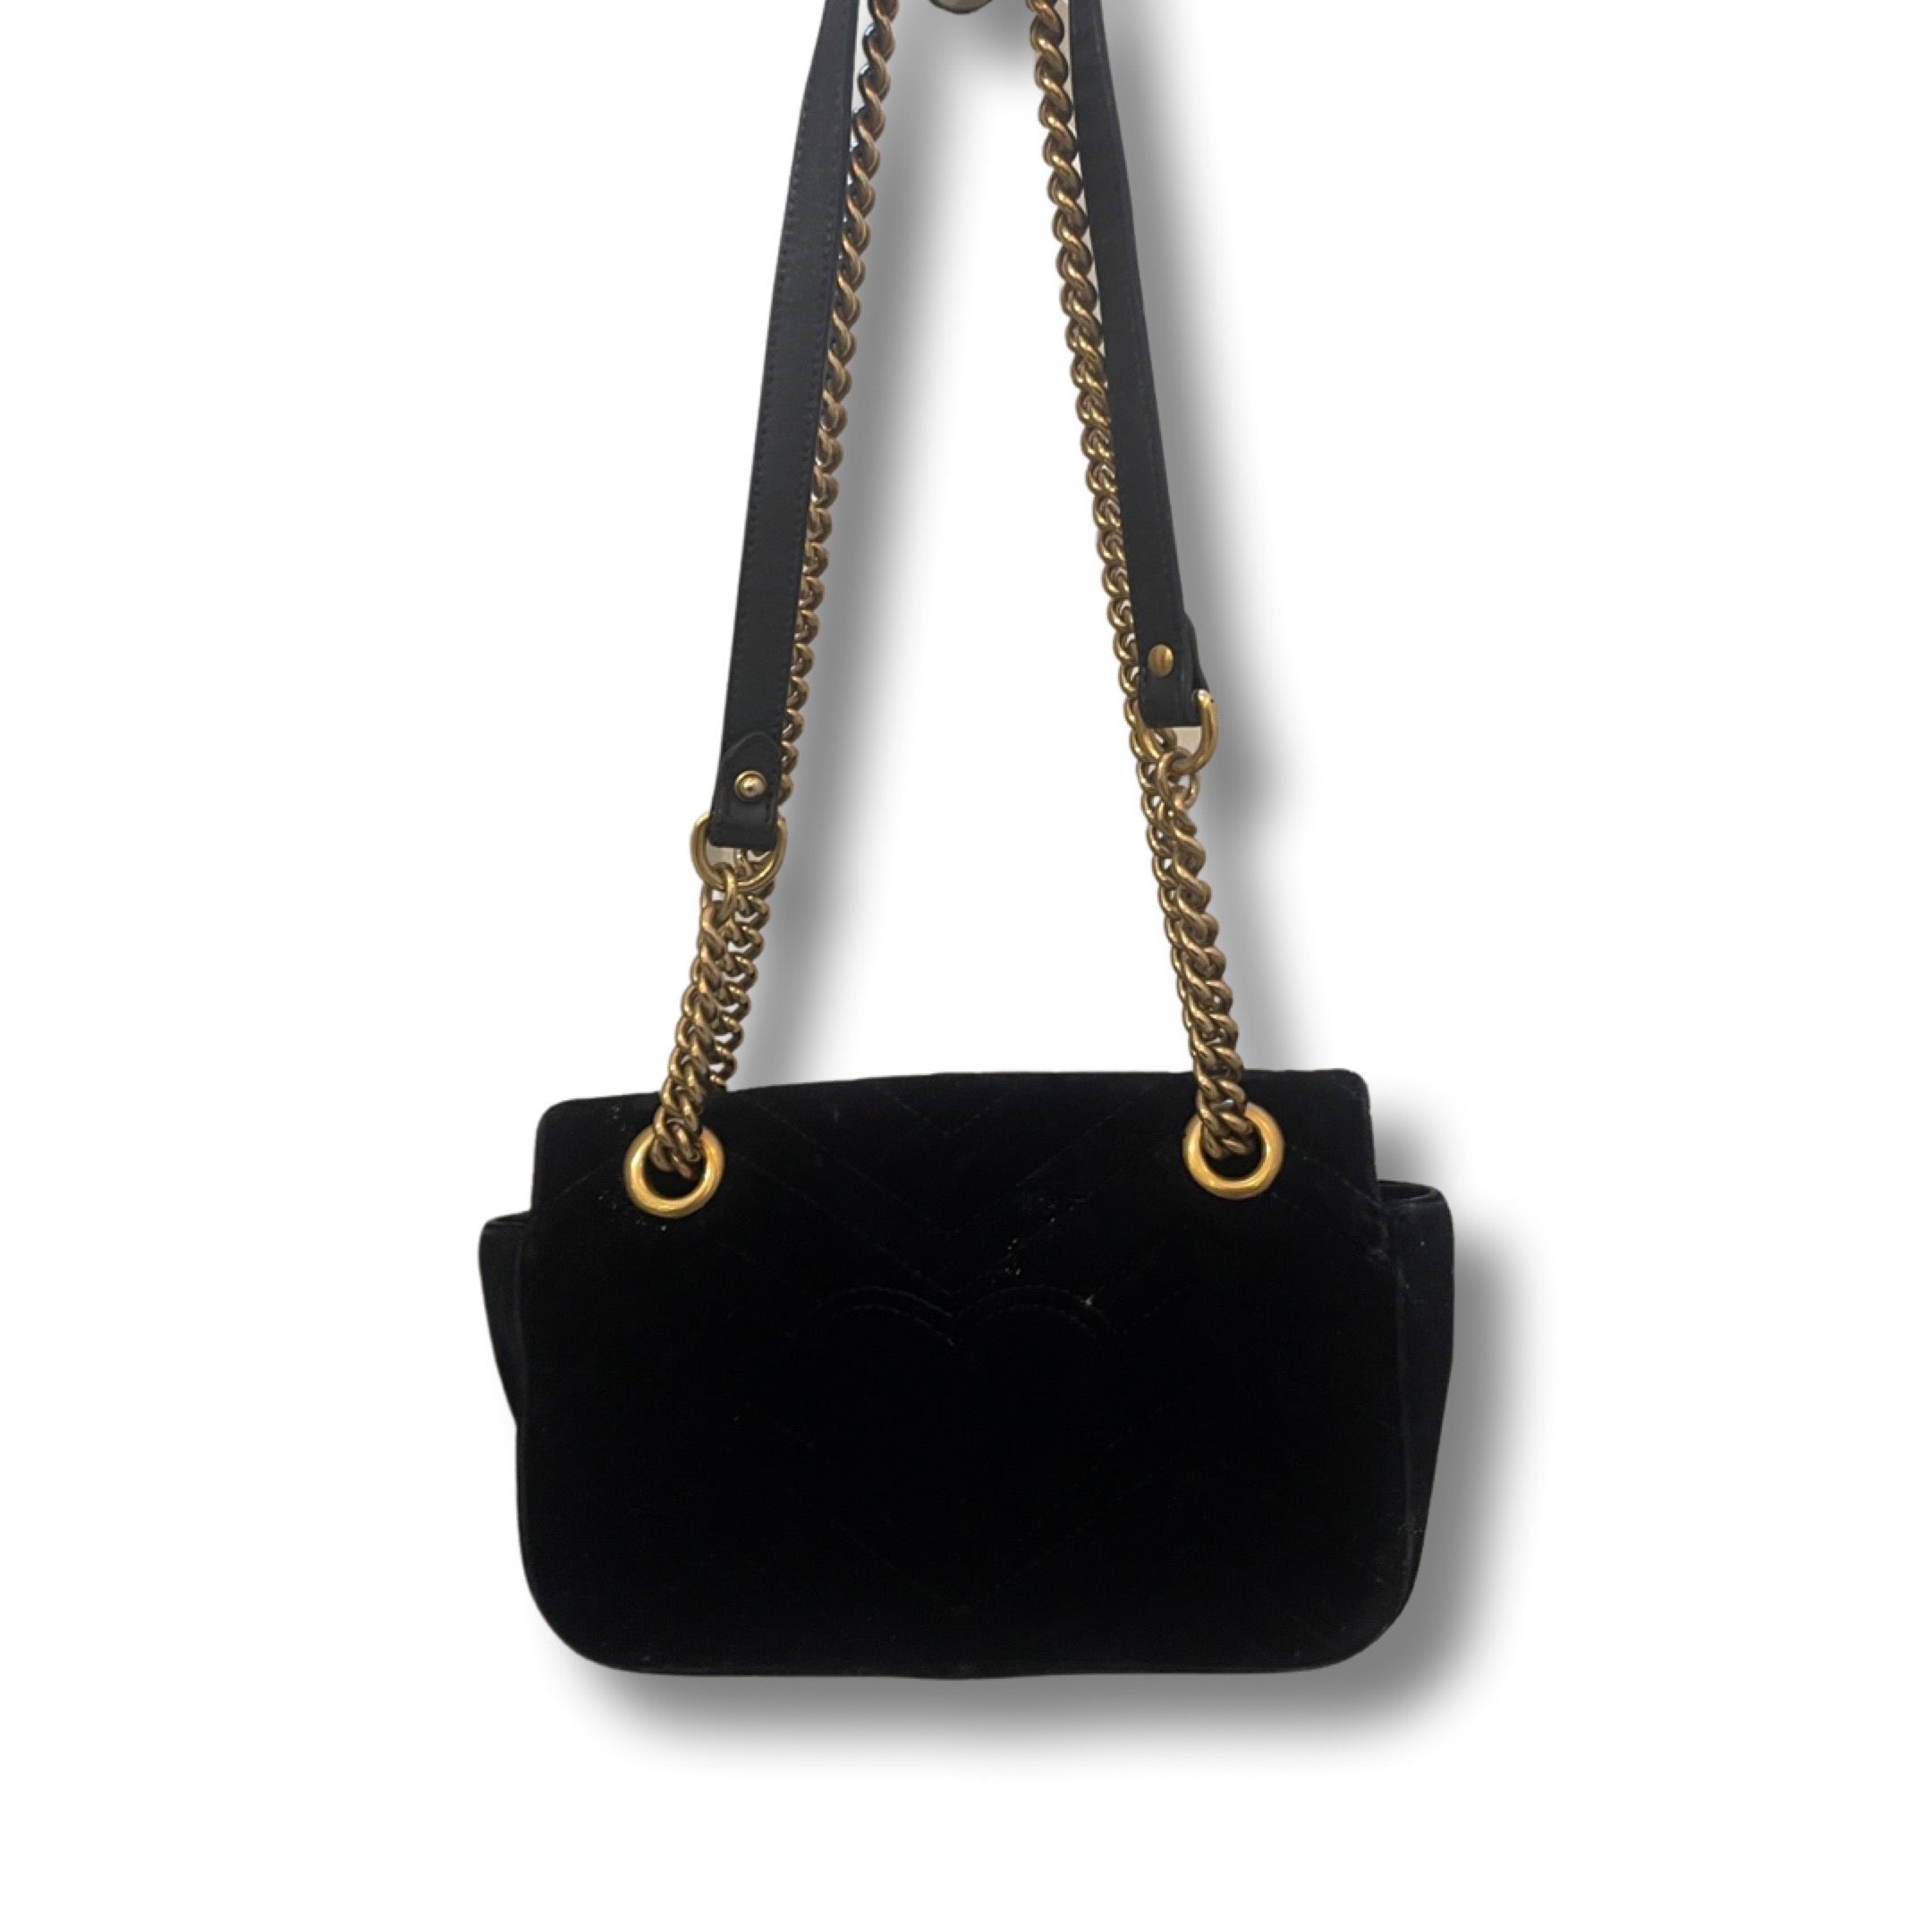 Gucci Marmont velvet handbag.